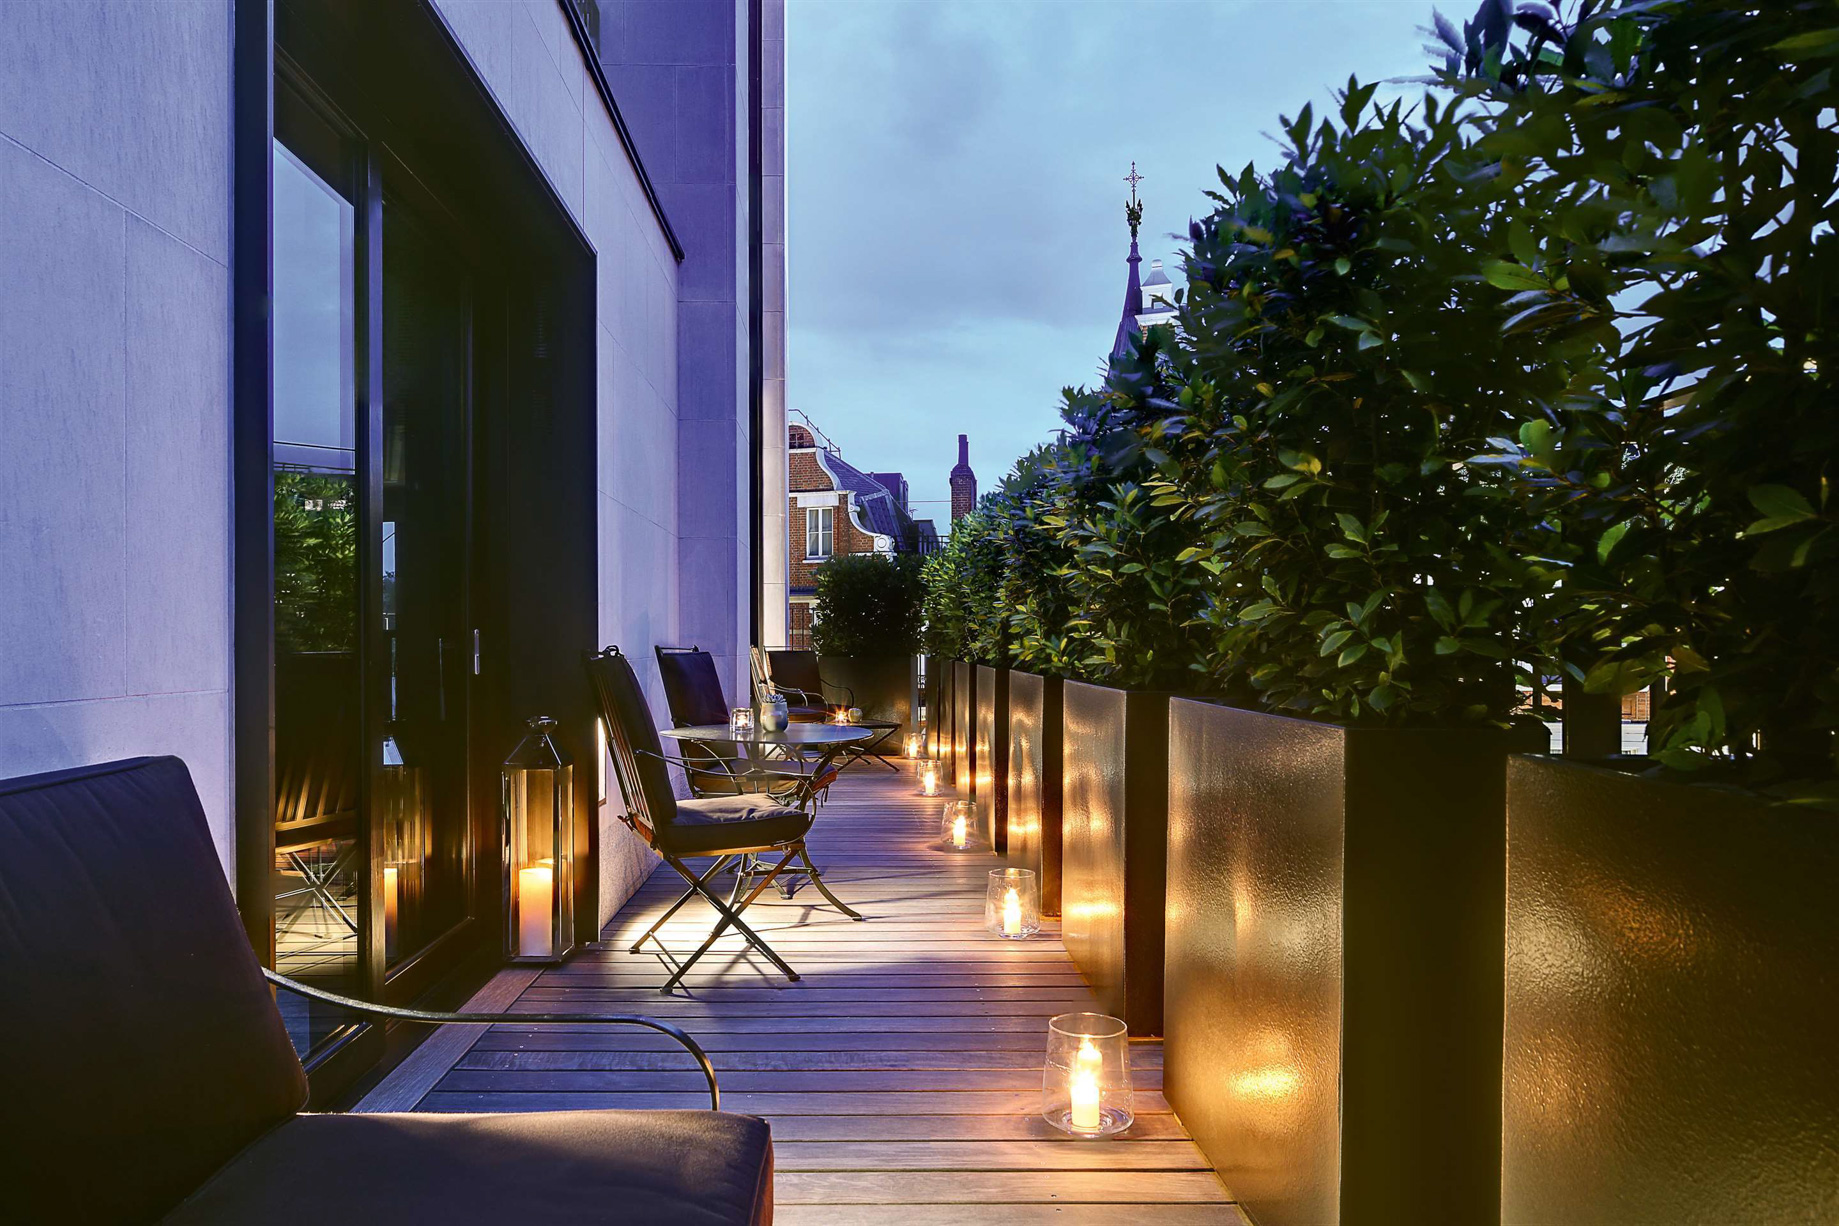 Bvlgari Hotel London – Knightsbridge, London, UK – Exterior Deck Terrace